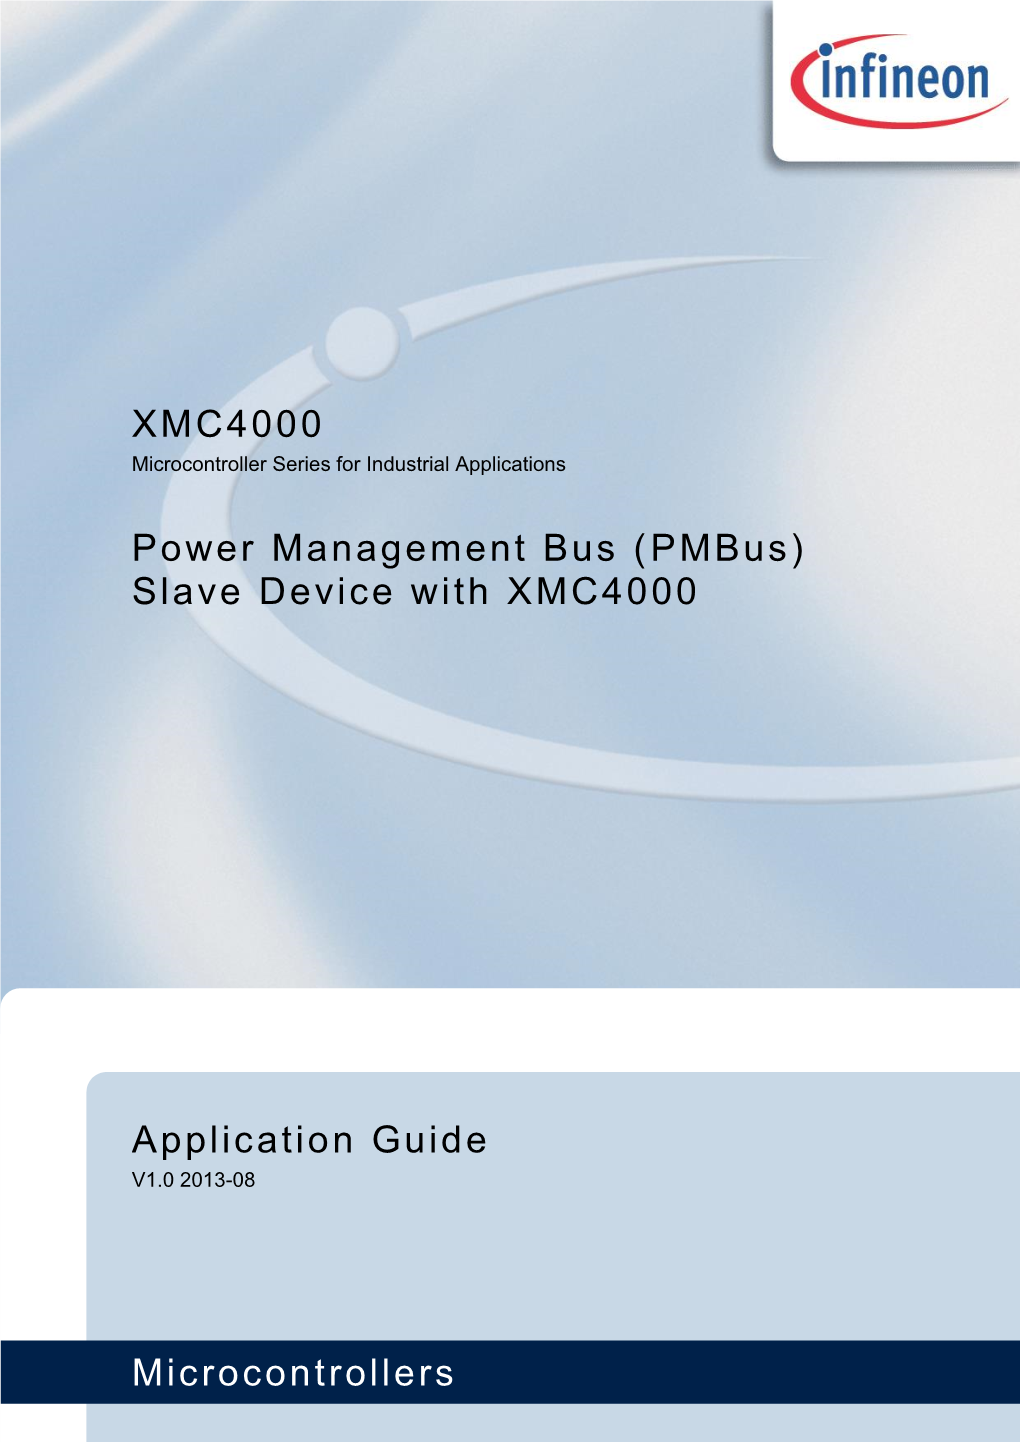 Power Management Bus (Pmbus) Slave Device with XMC4000